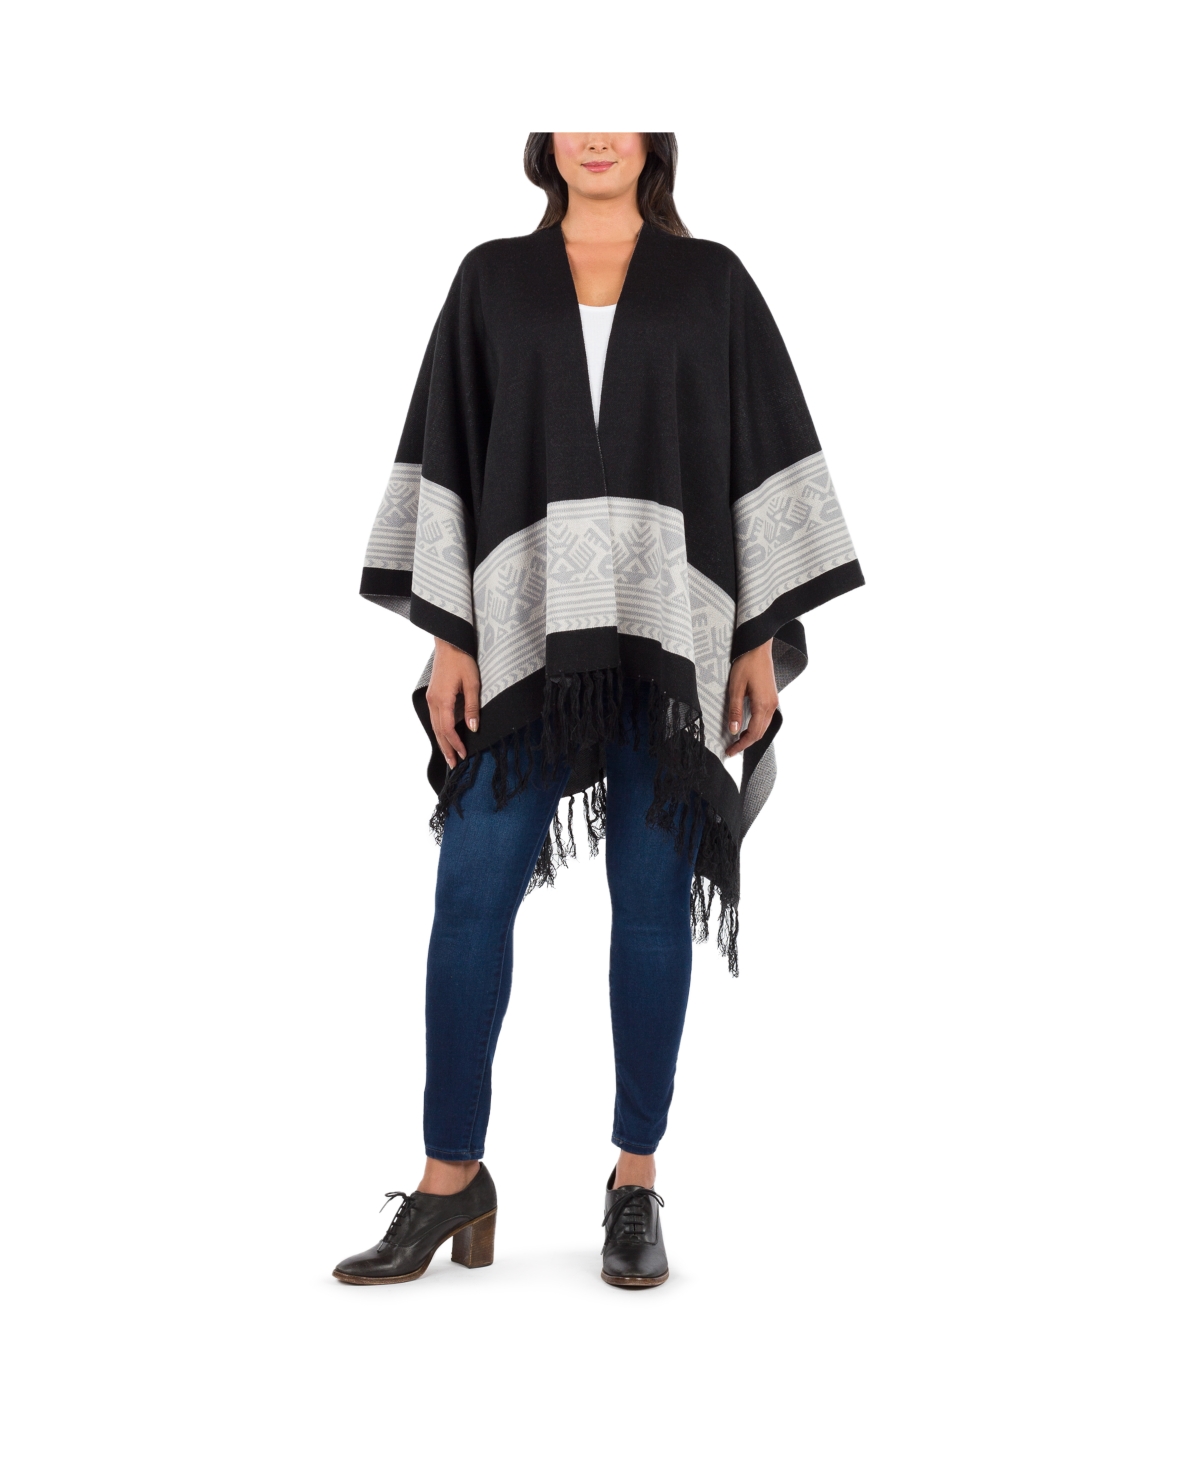 Women's Boho Cape Sweater - Black Stone Gray